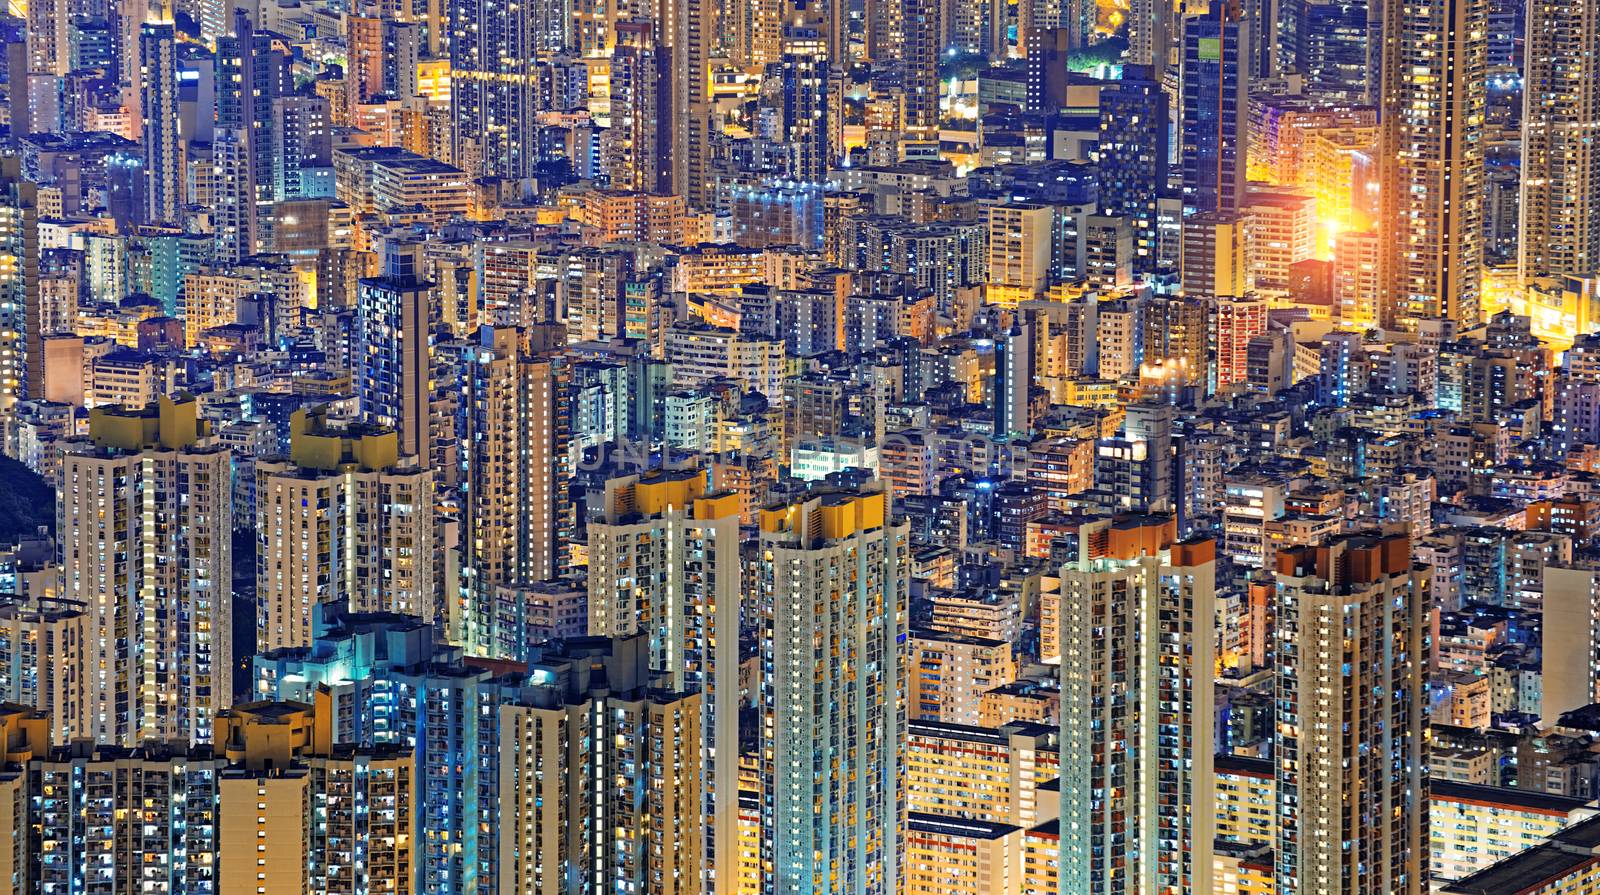 Hong Kong Public living downtown at night by cozyta